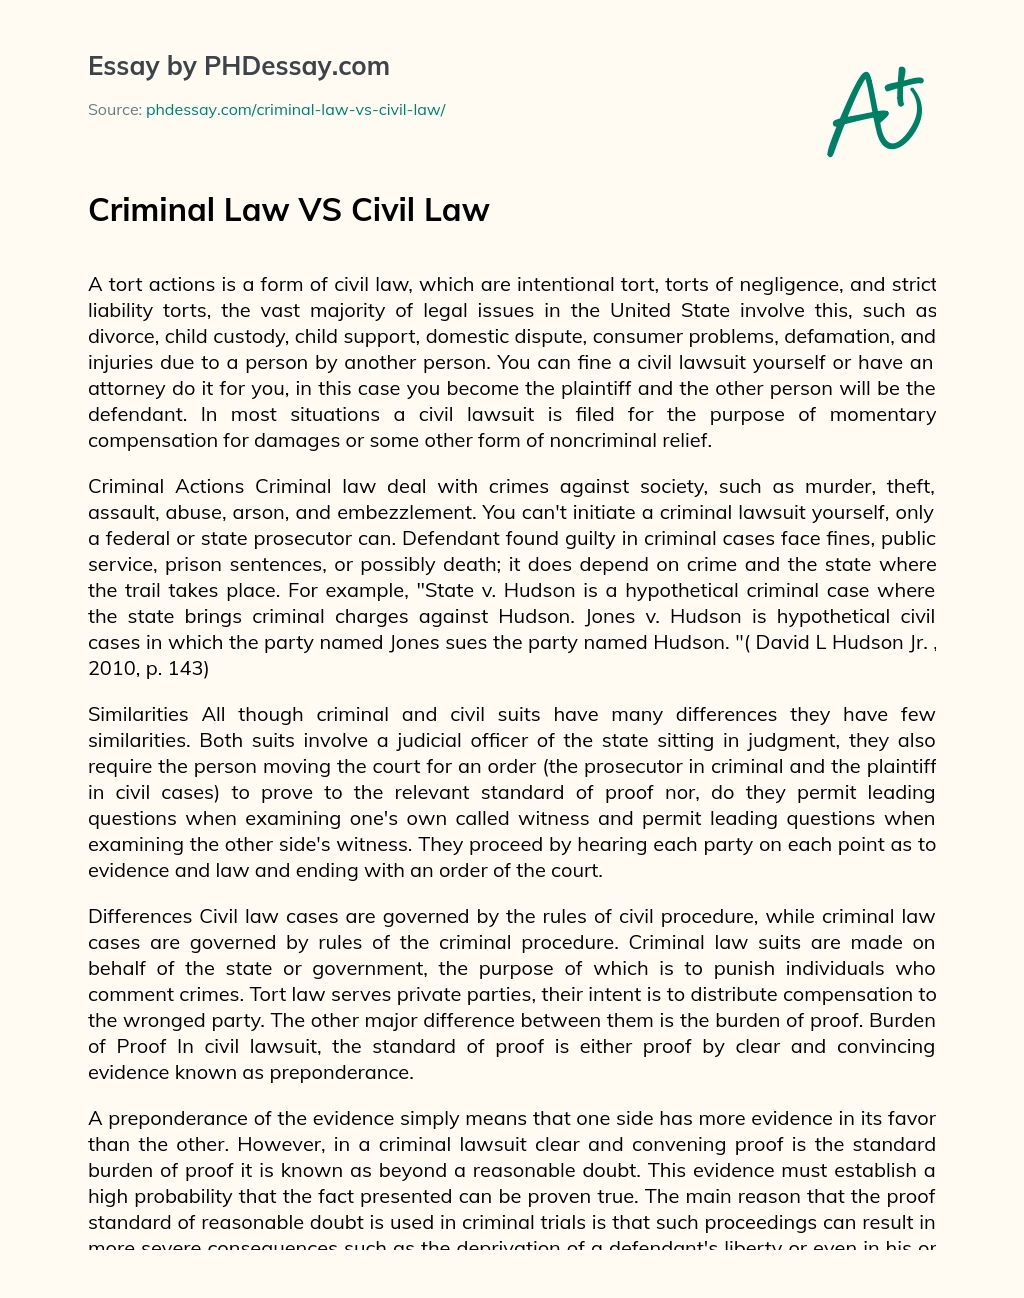 Criminal Law VS Civil Law essay